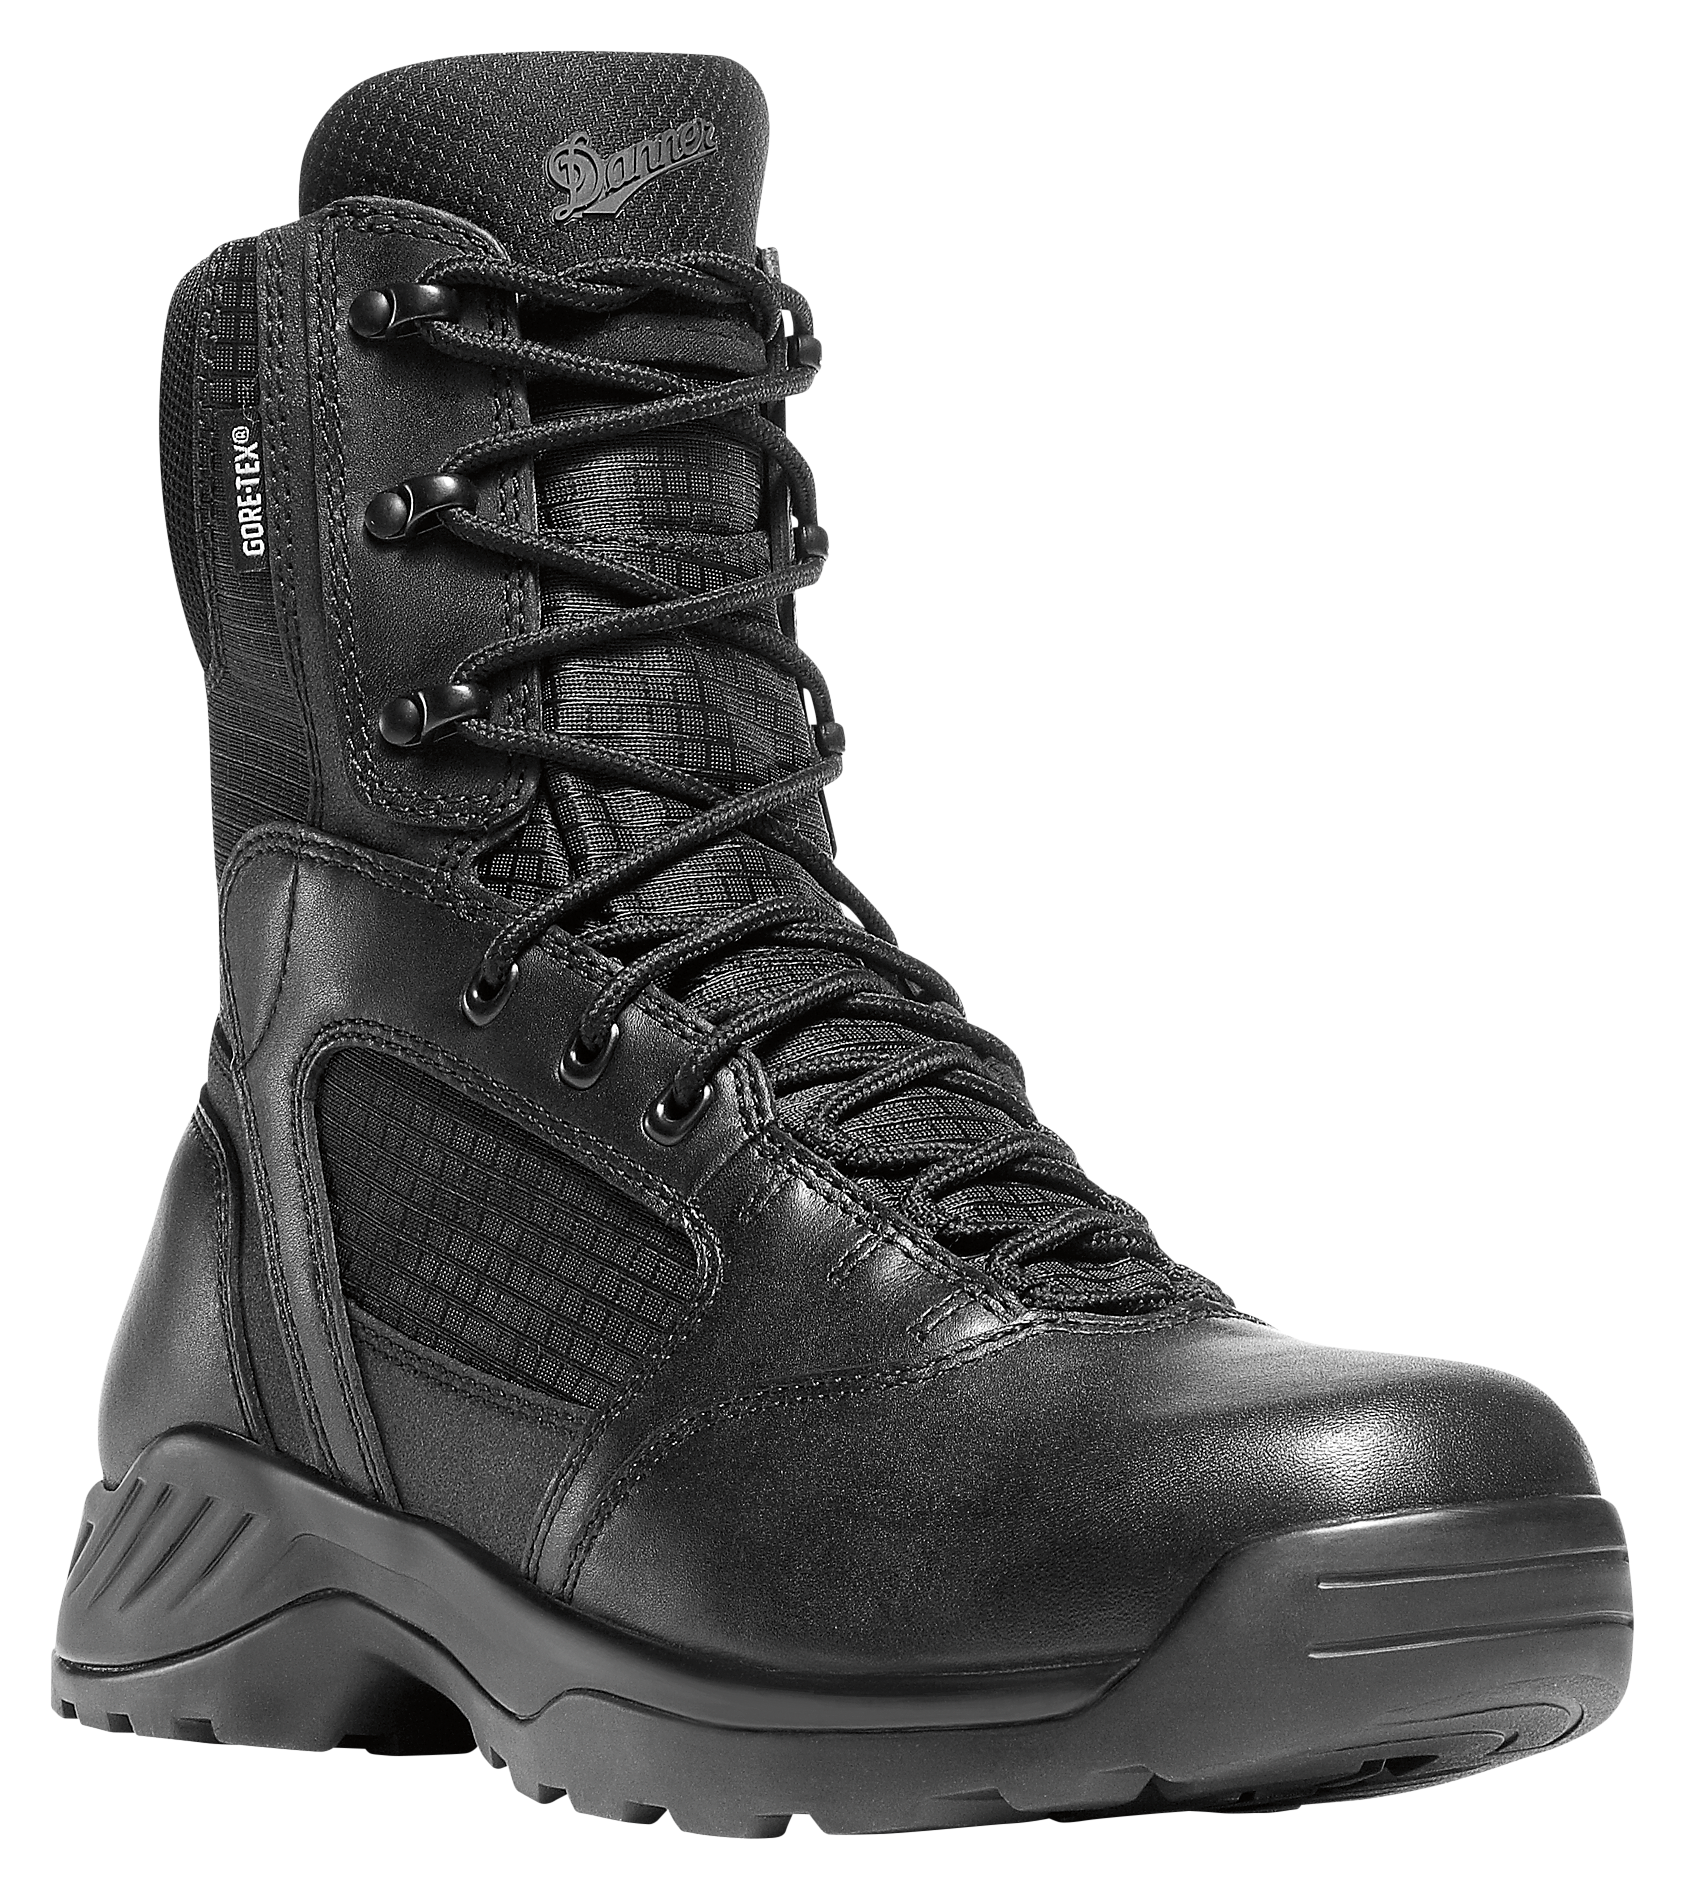 Danner Kinetic GTX Side-Zip Waterproof Tactical Duty Boots for Men - Black - 7.5W